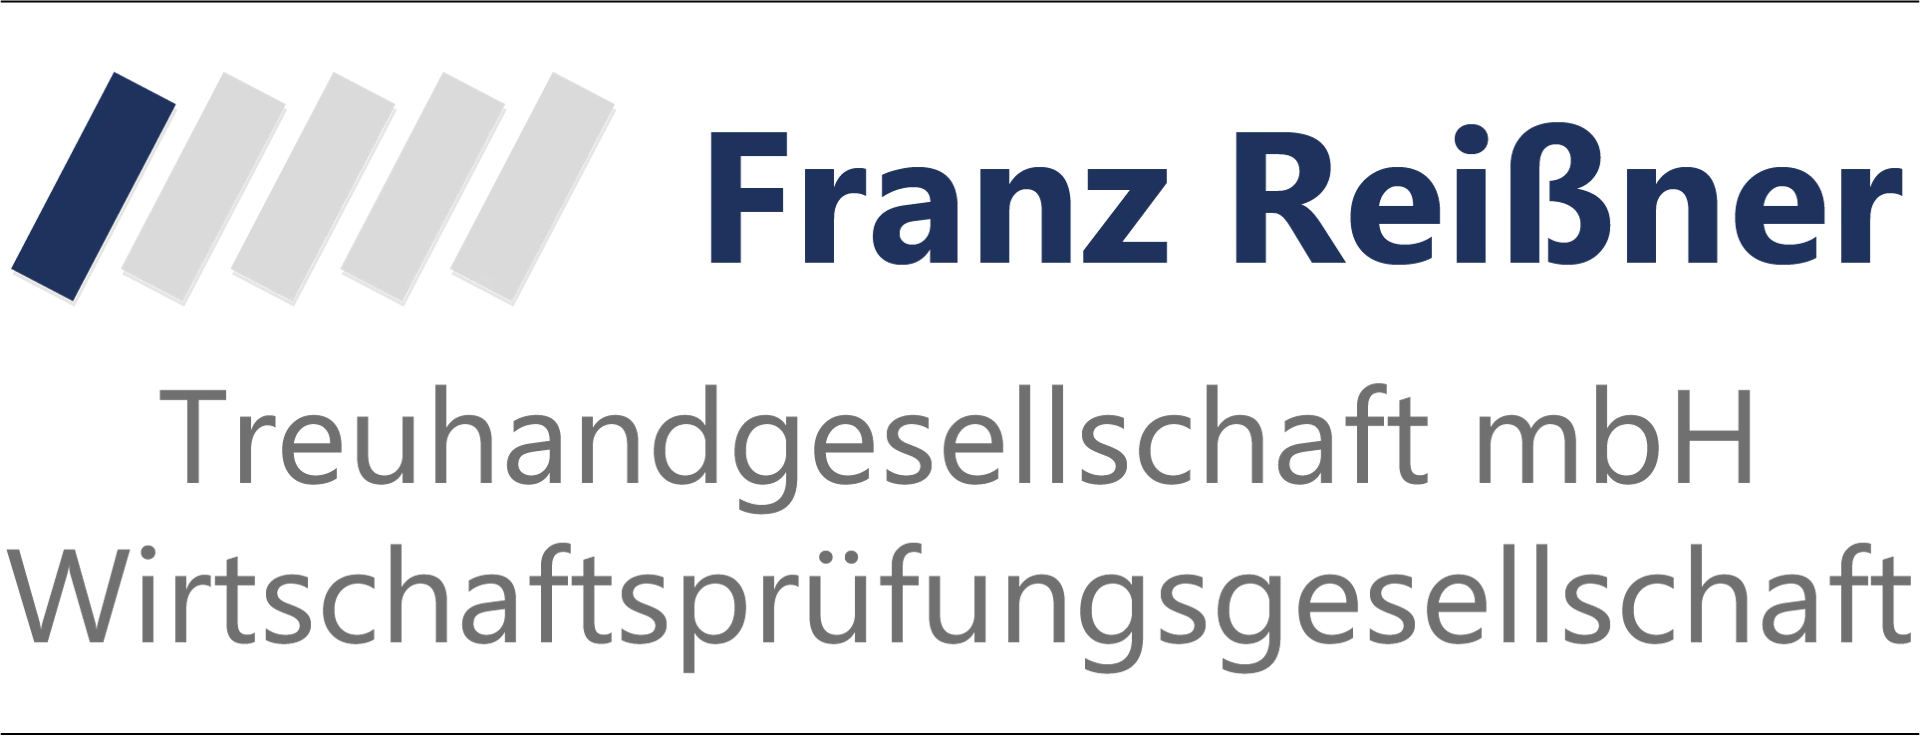 Franz Reißner Treuhandgesellschaft mbH Wirtschaftsprüfungsgesellschaft